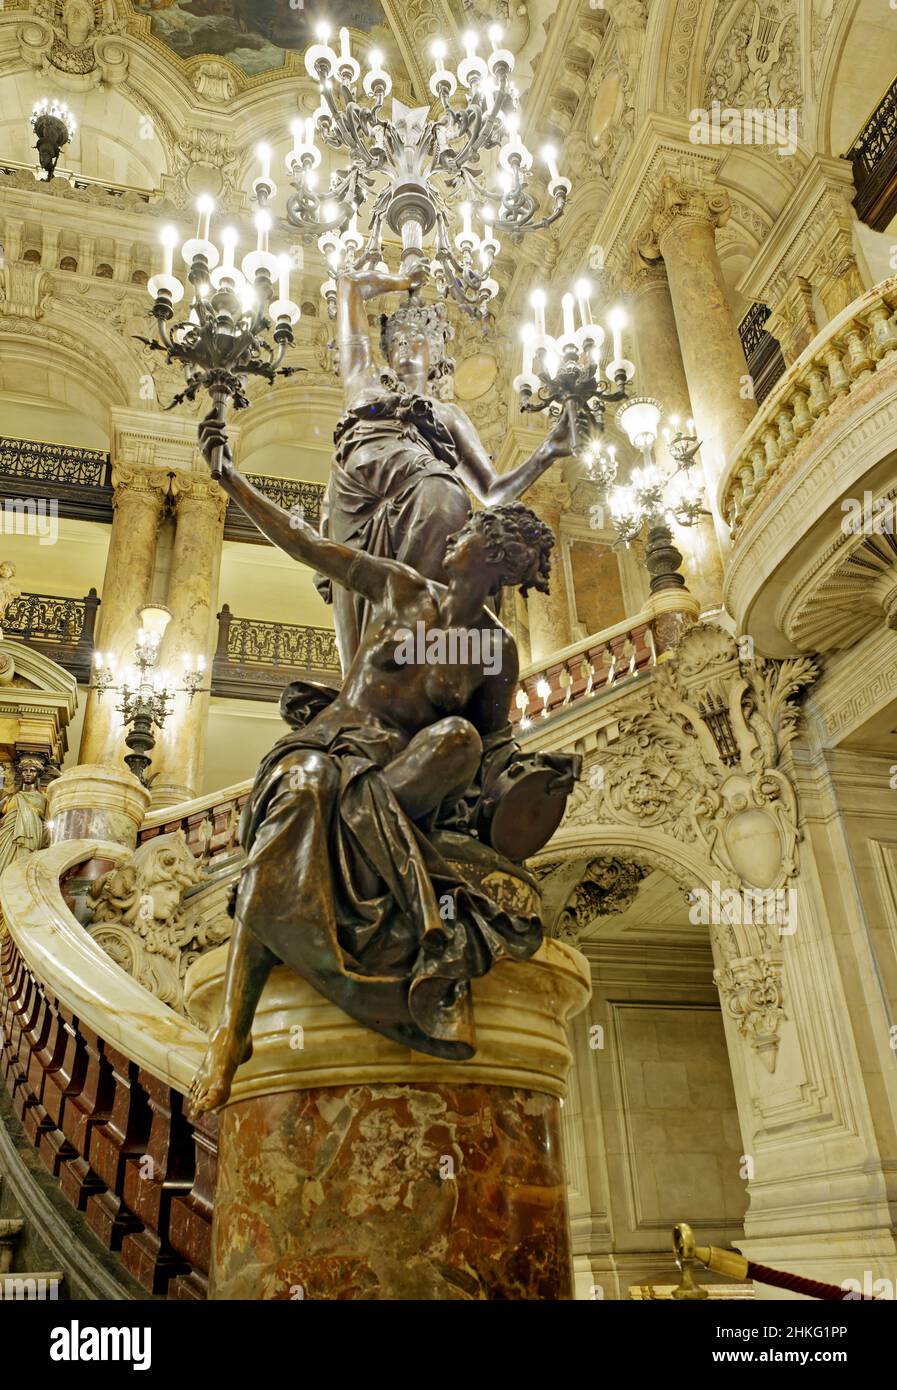 France, Paris, Garnier opera house, the stairway Stock Photo